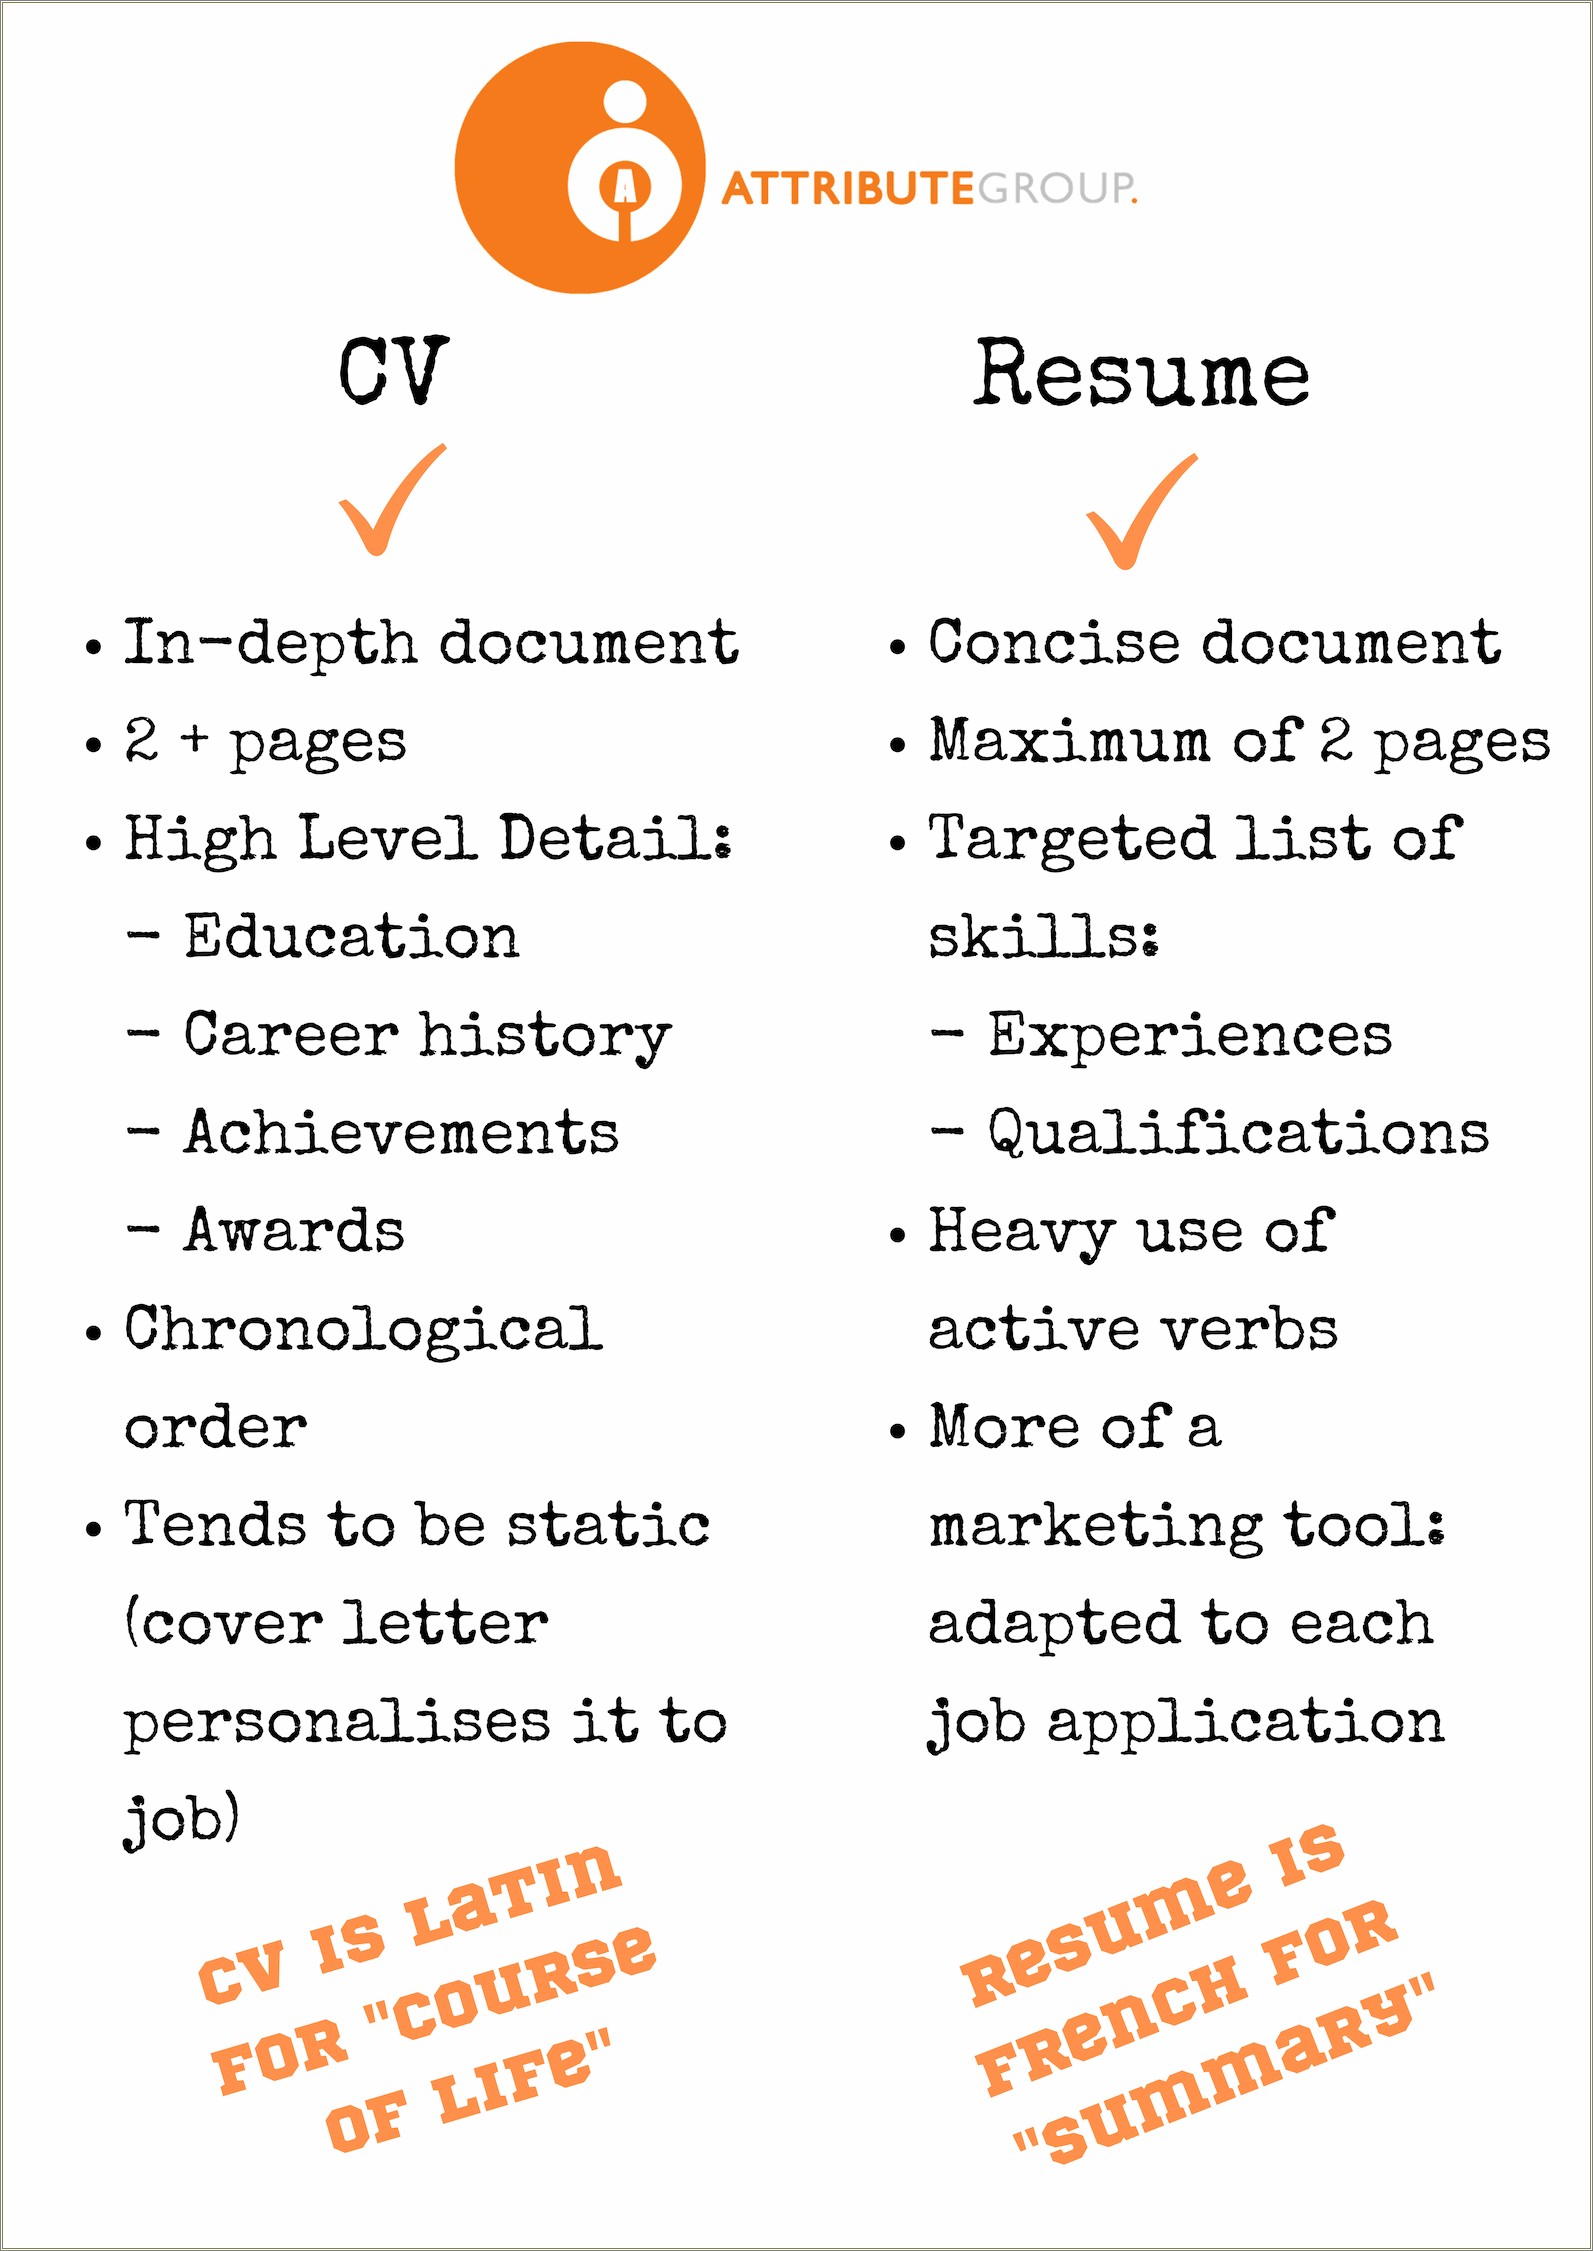 Listing Responsibilities And Skills On Application Vs Resume